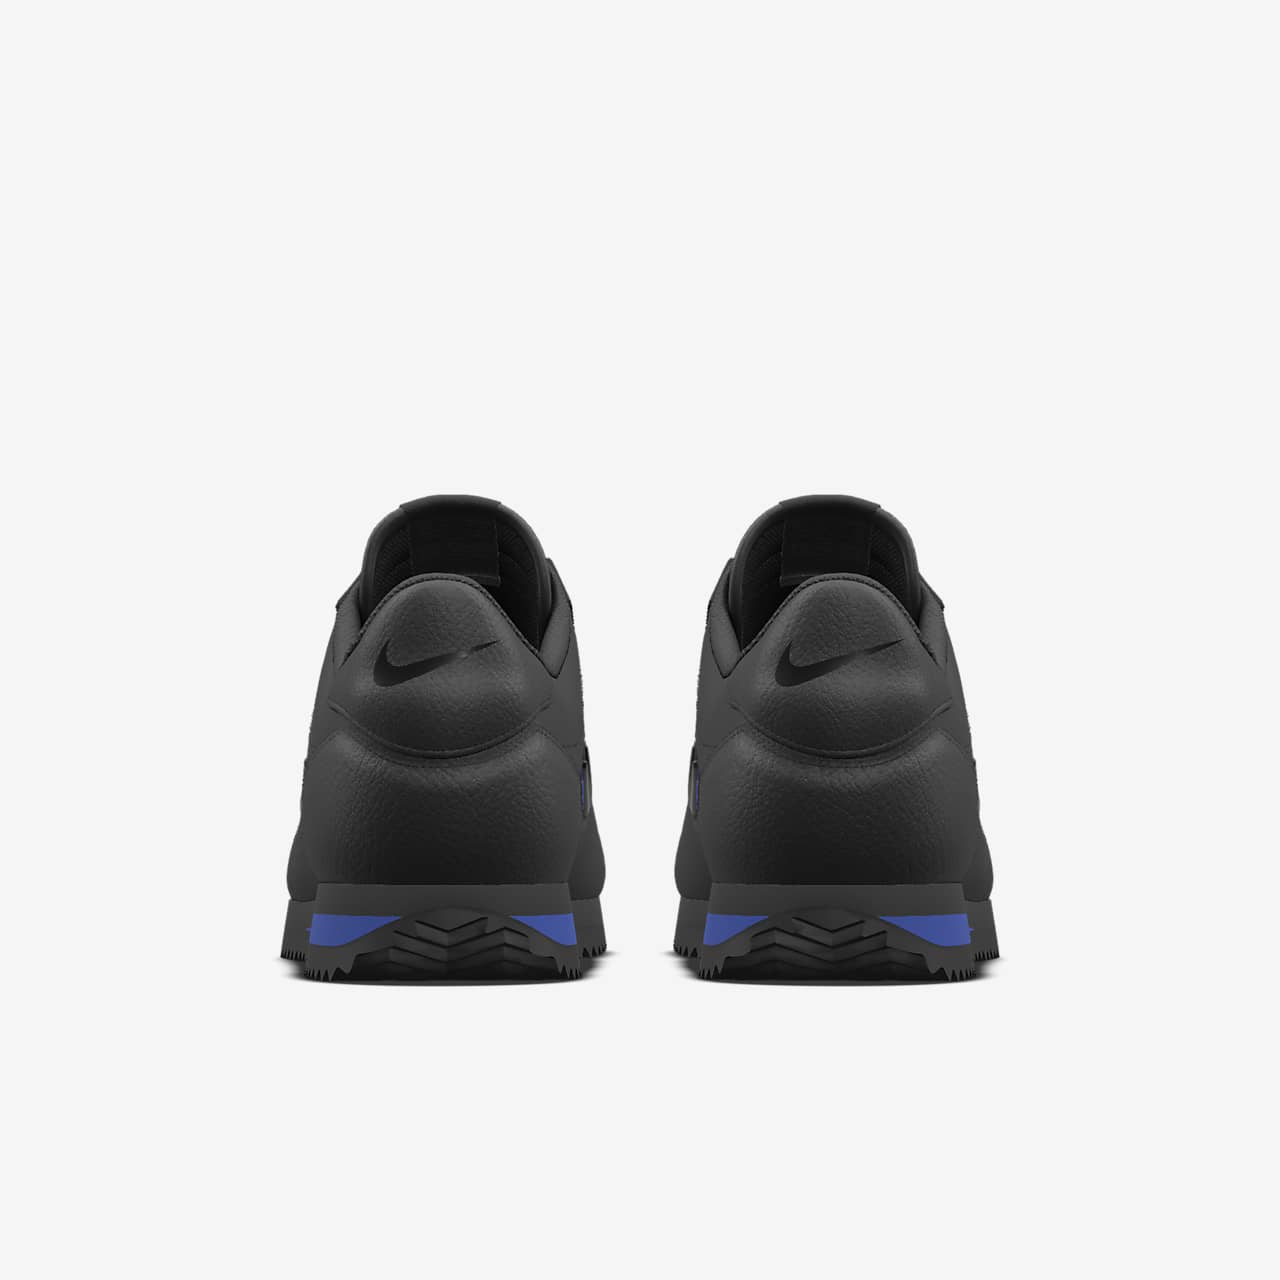 Nike Cortez Unlocked By You Custom Women's Shoes.